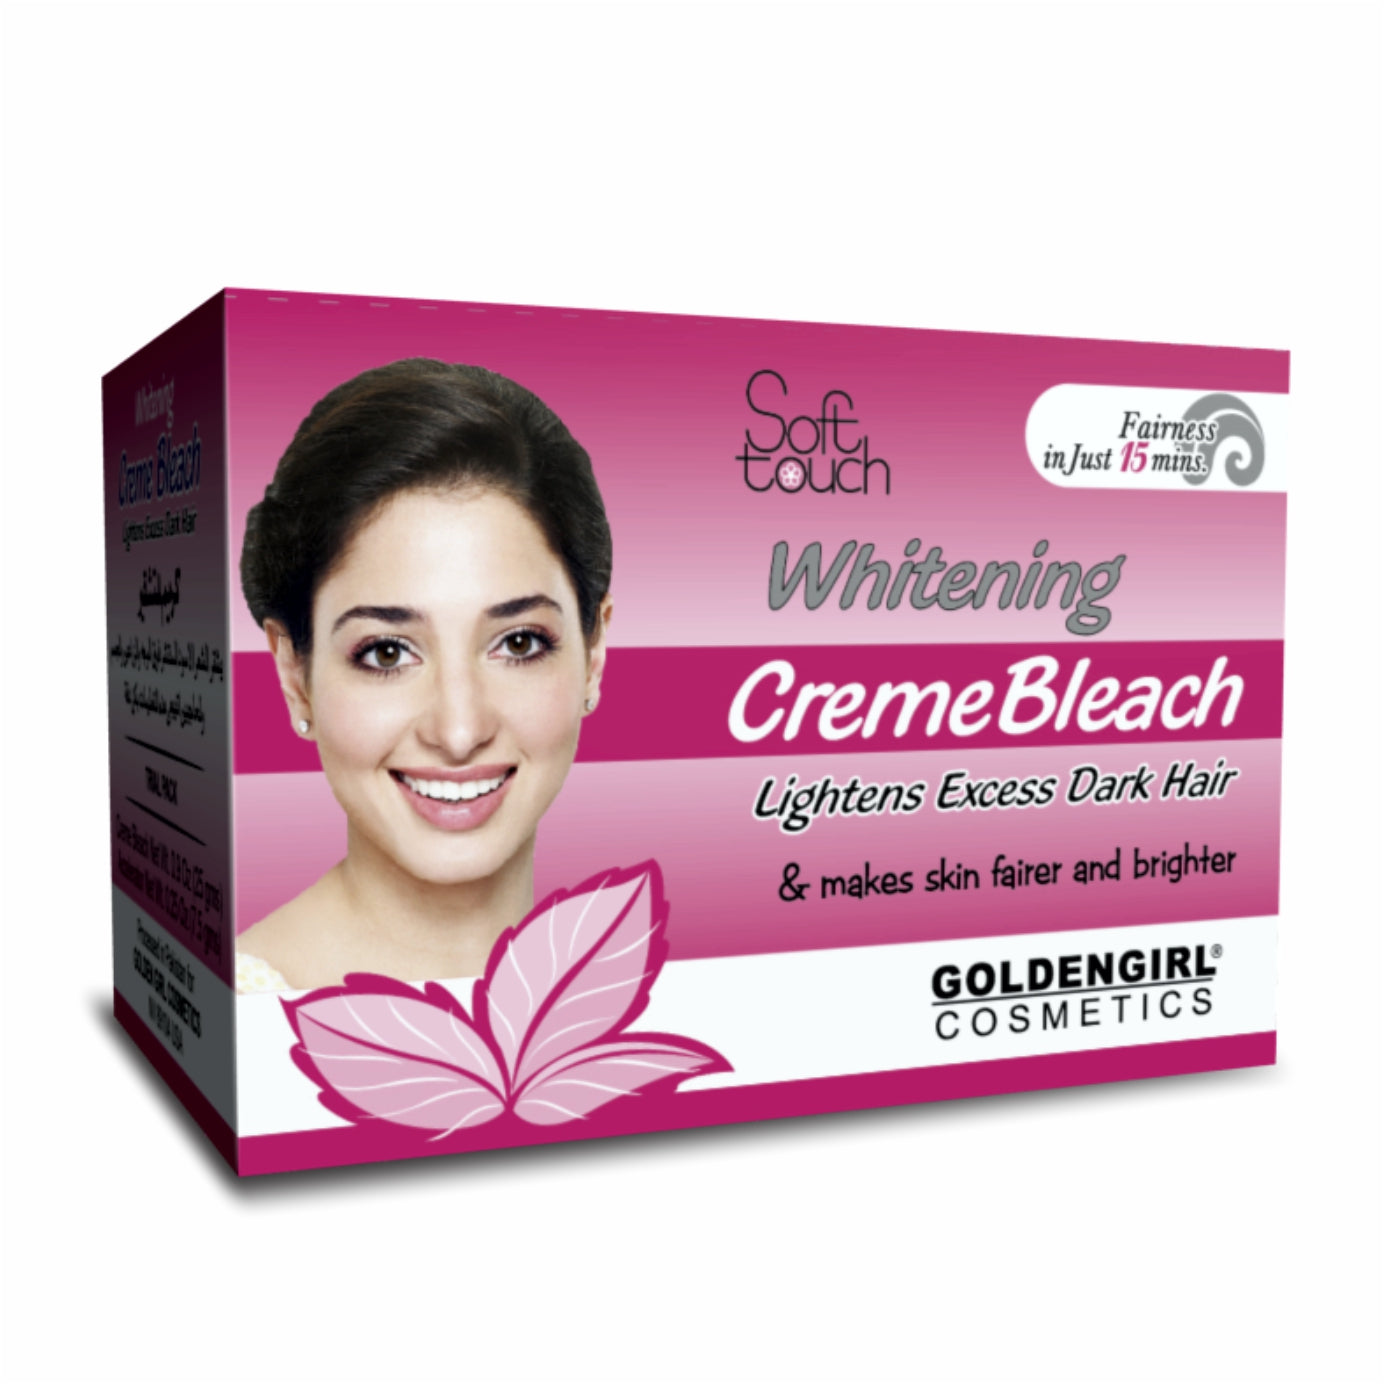 Whitening Bleach Creme Trial Pack 25gm - Golden Girl Cosmetics